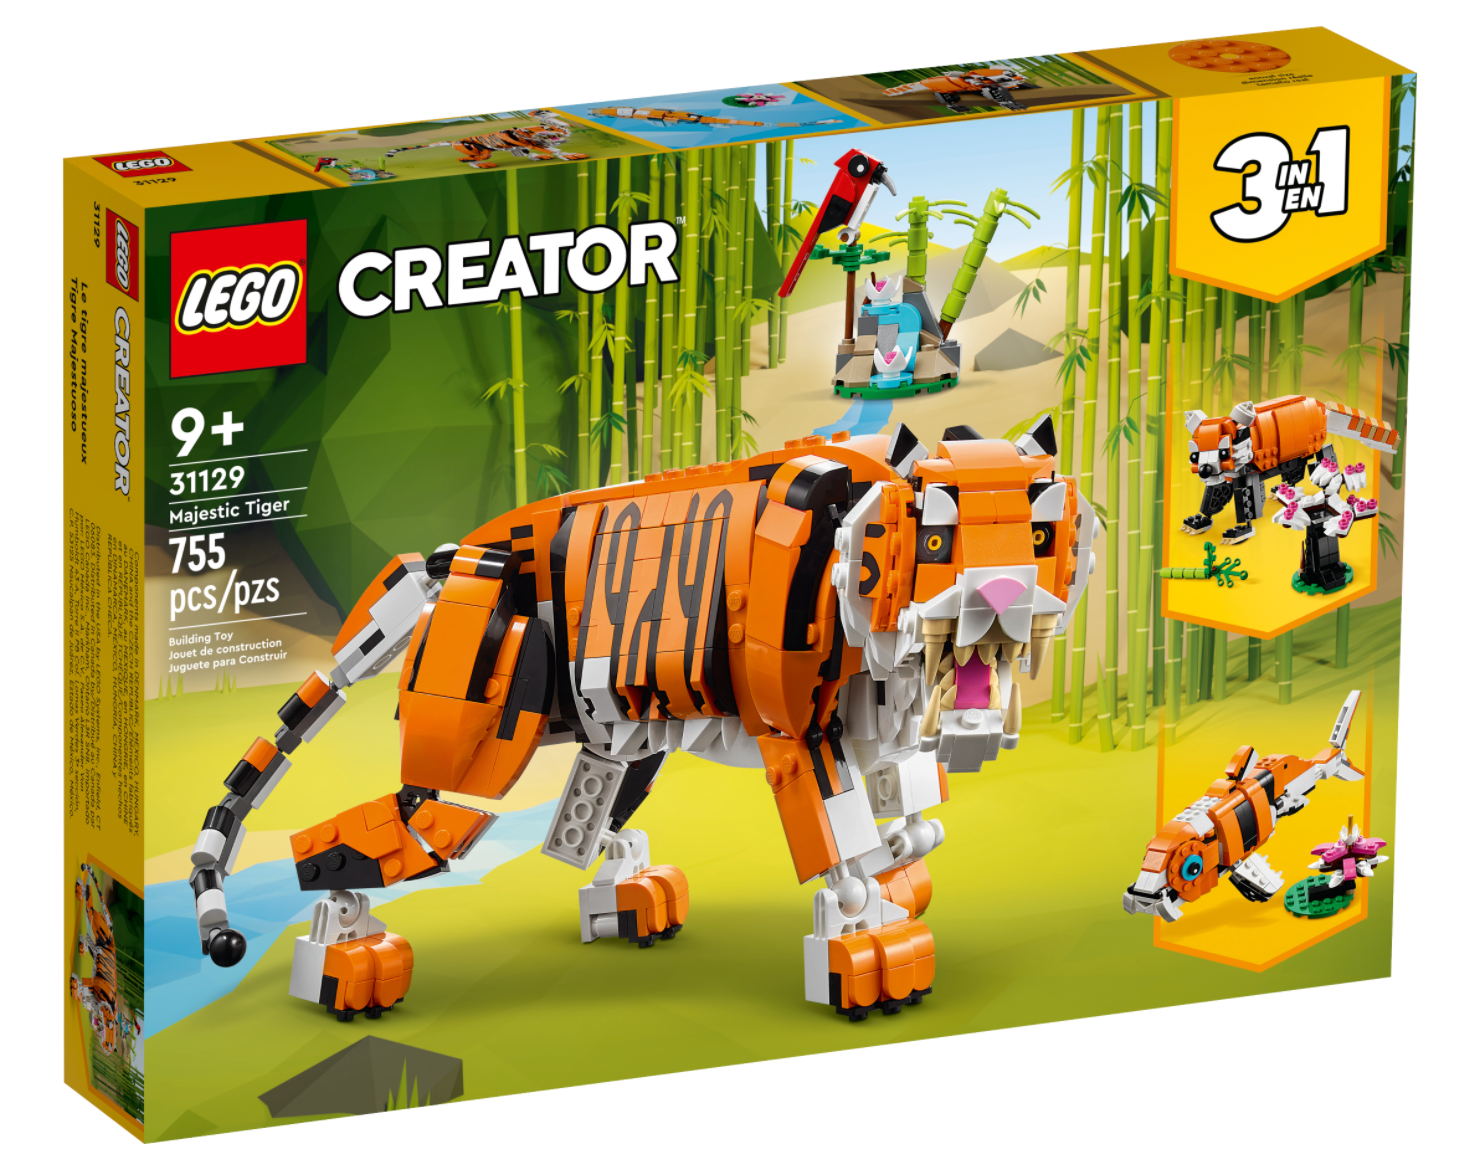 LEGO: Creator - Majestic Tiger